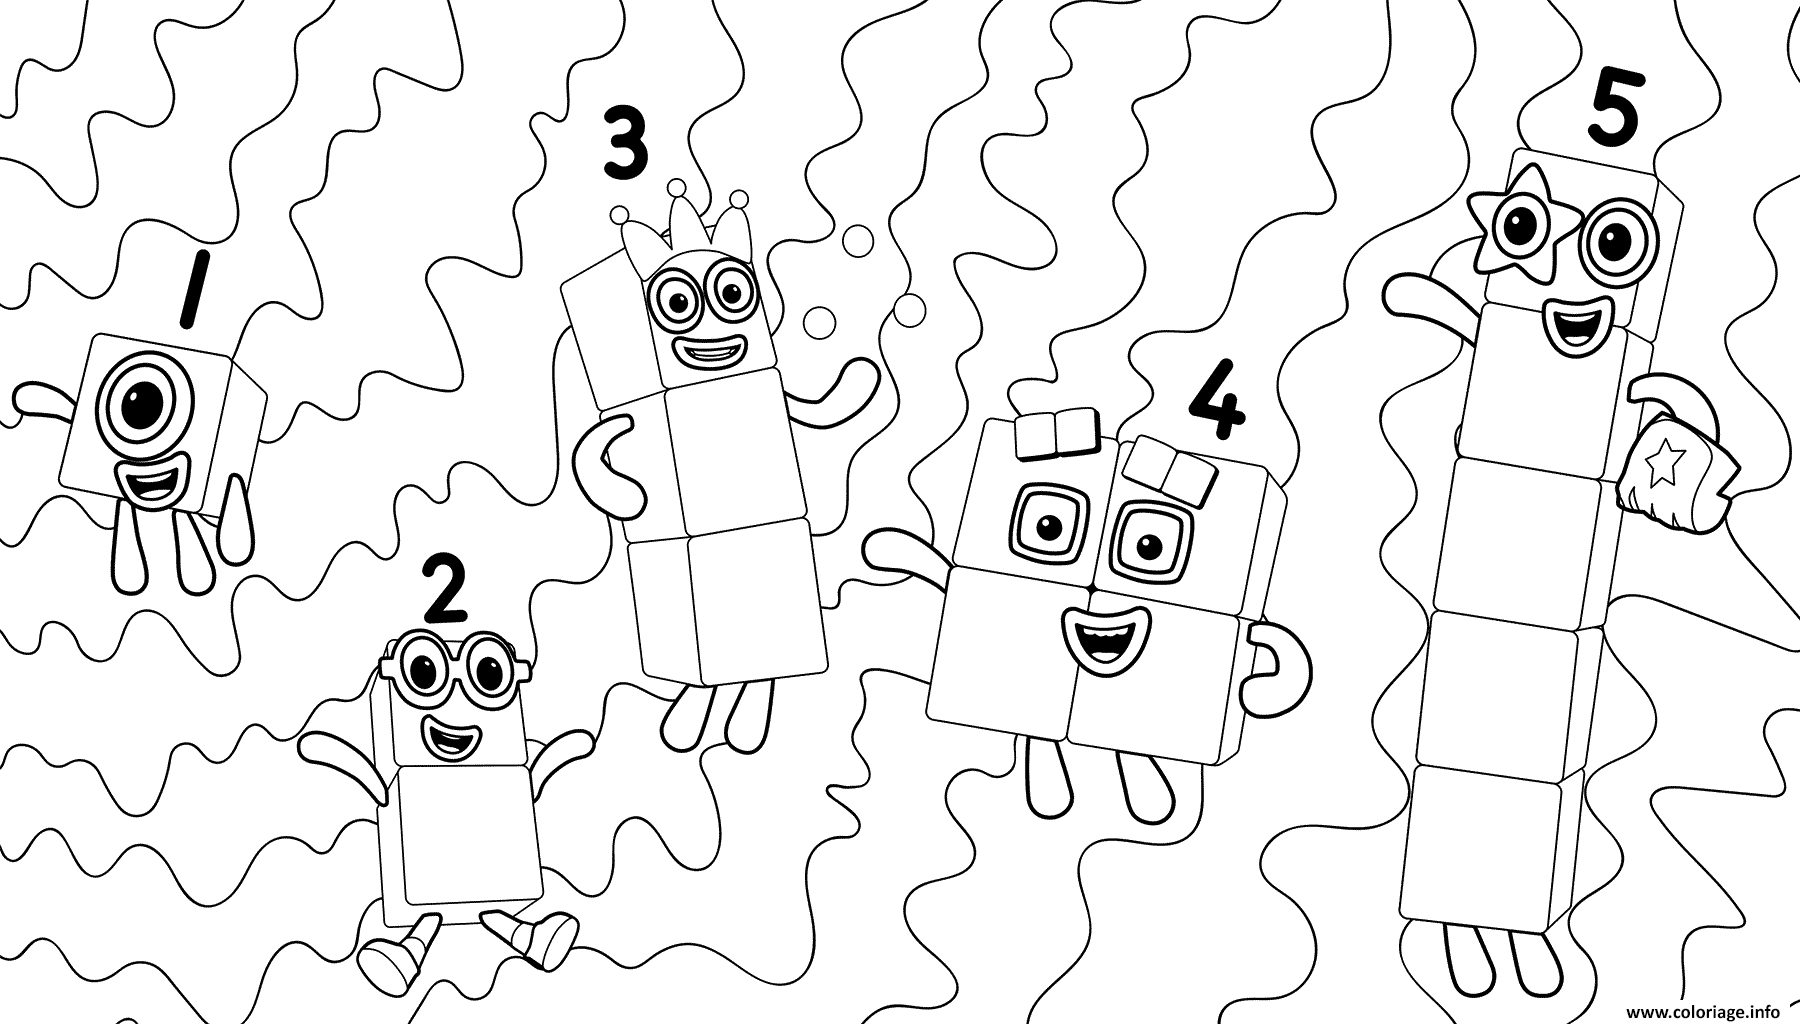 Coloriage Numberblocks Numbers 1 To 5 Fun Dessin à Imprimer